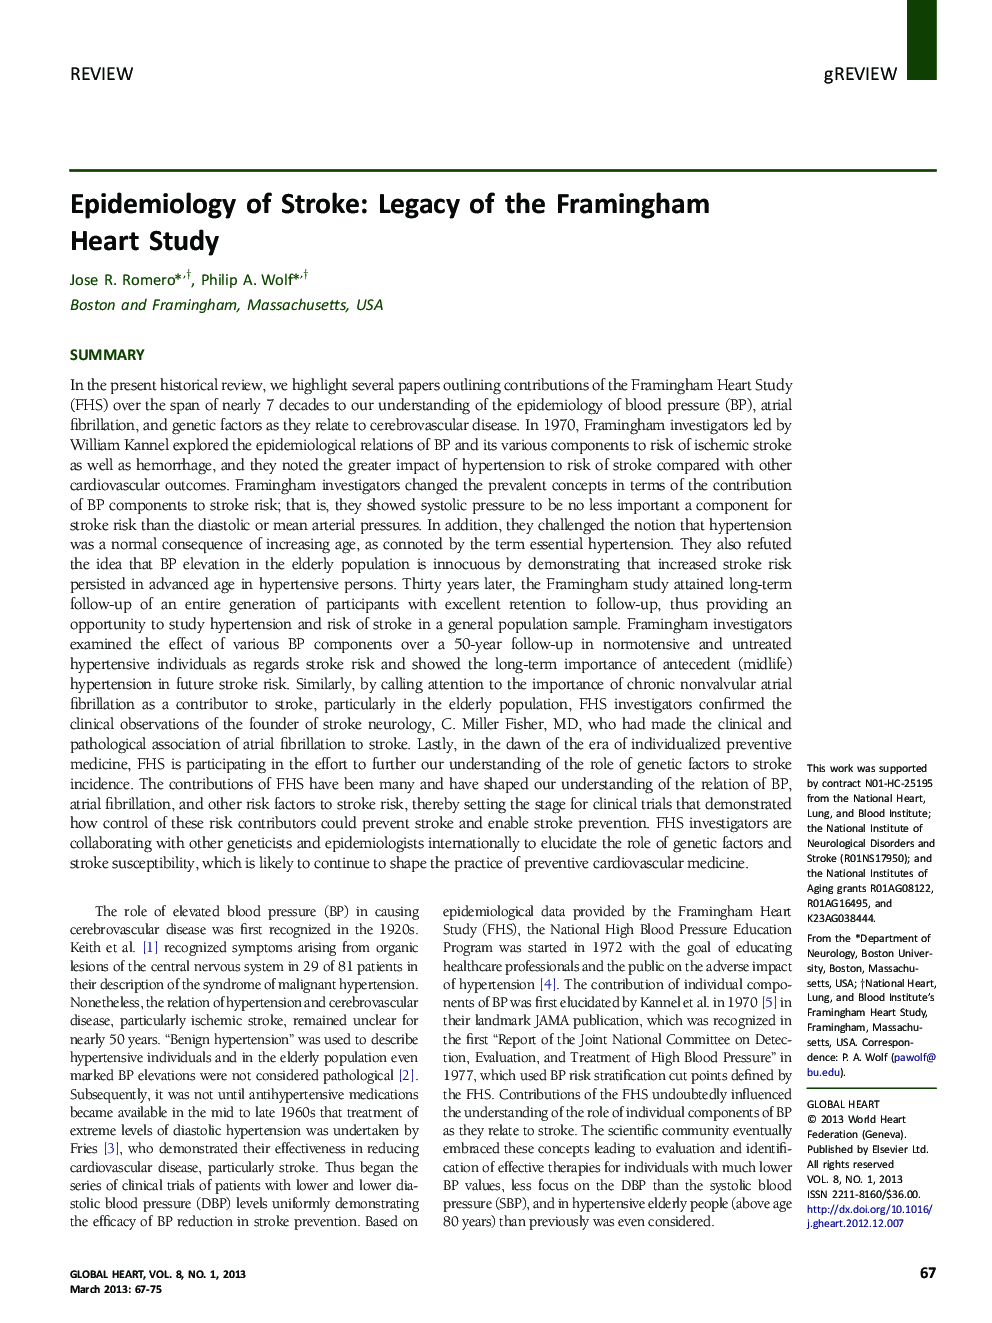 Epidemiology of Stroke: Legacy of the Framingham Heart Study